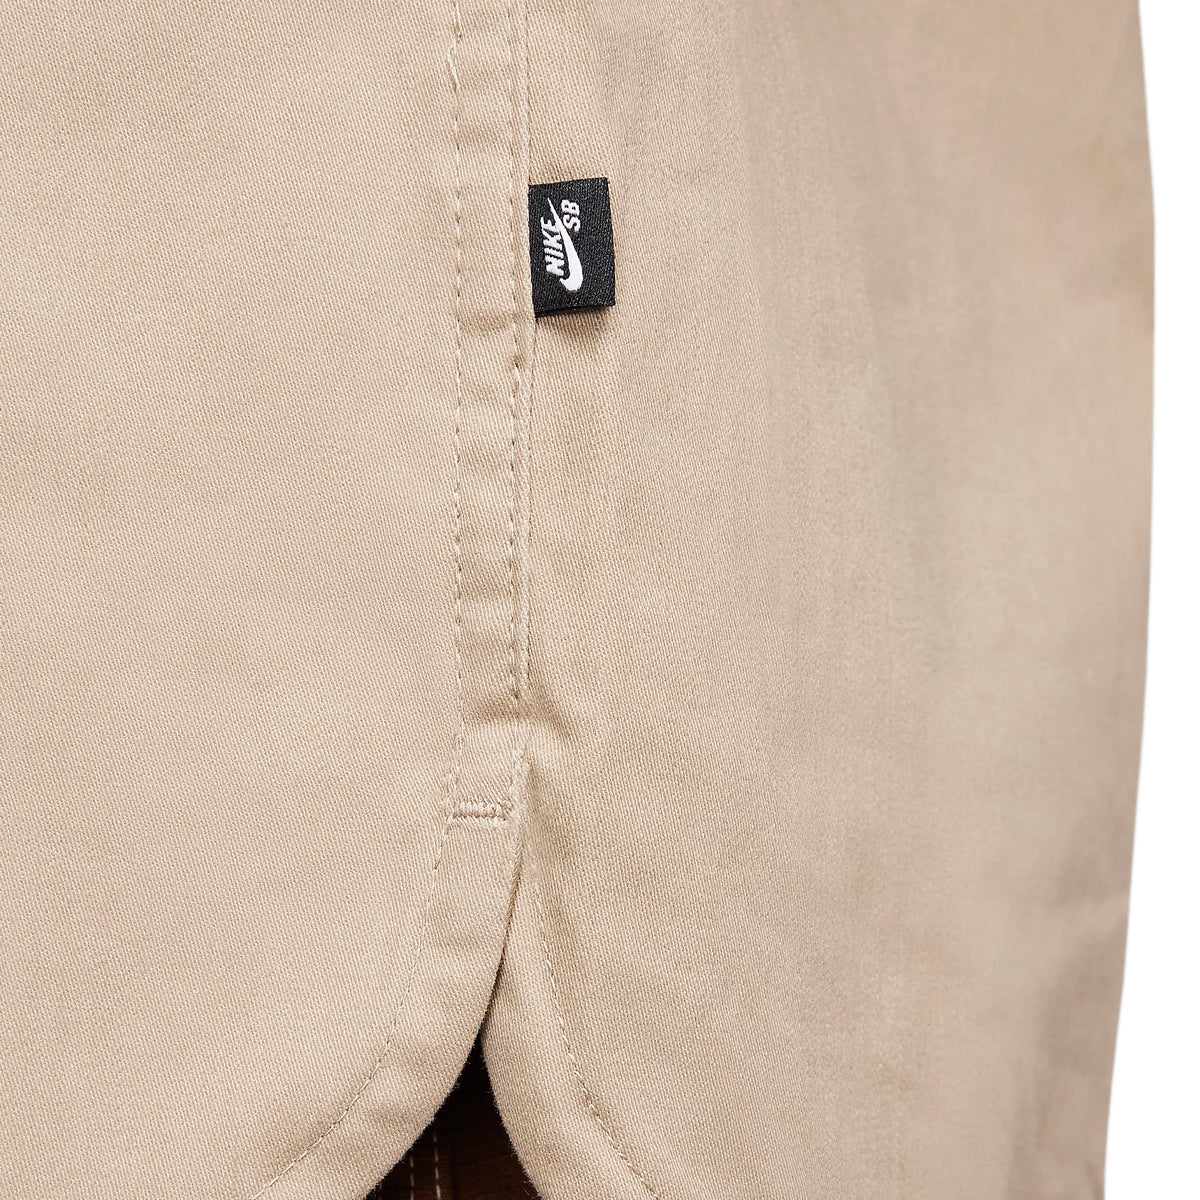 Nike SB Tanglin Button Up Woven Long Sleeve Shirt - Khaki image 5